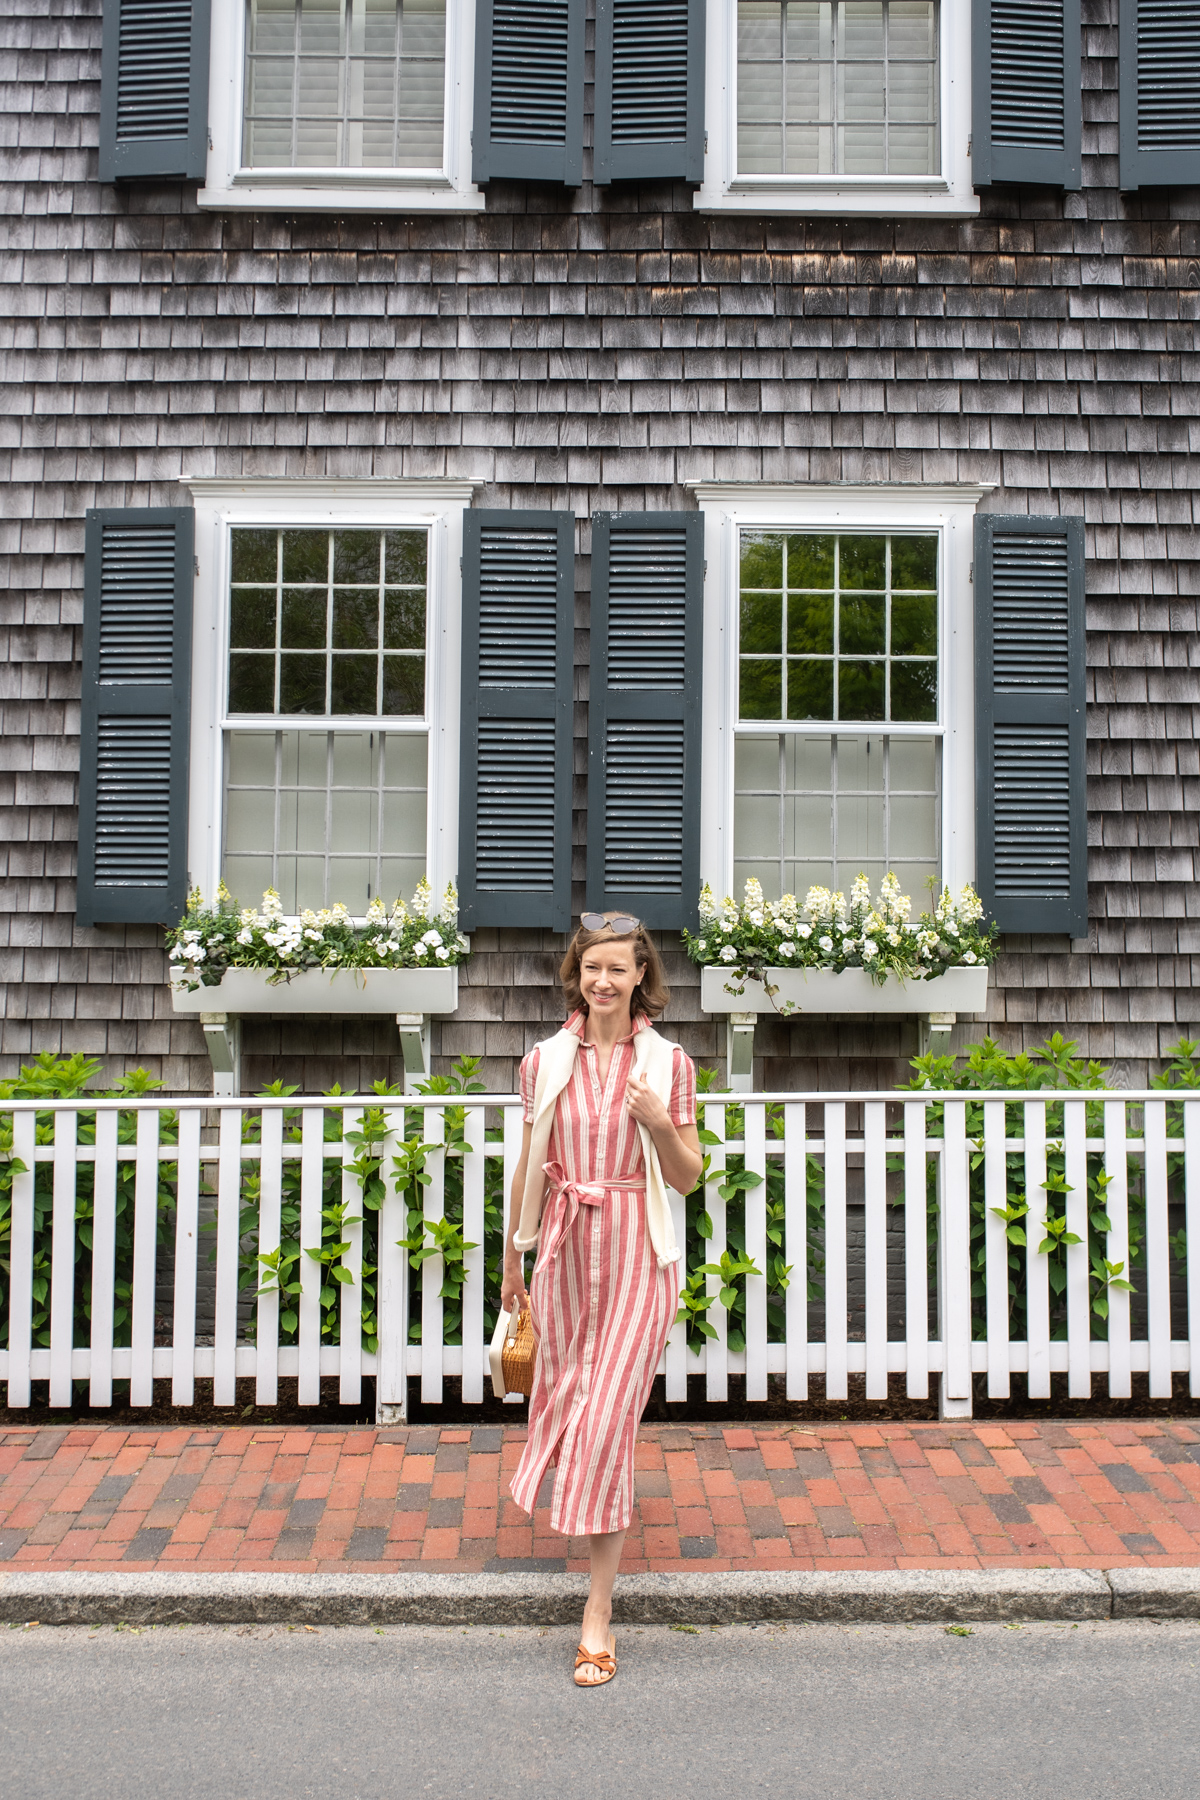 Stacie Flinner x Nantucket Island in June-27.jpg